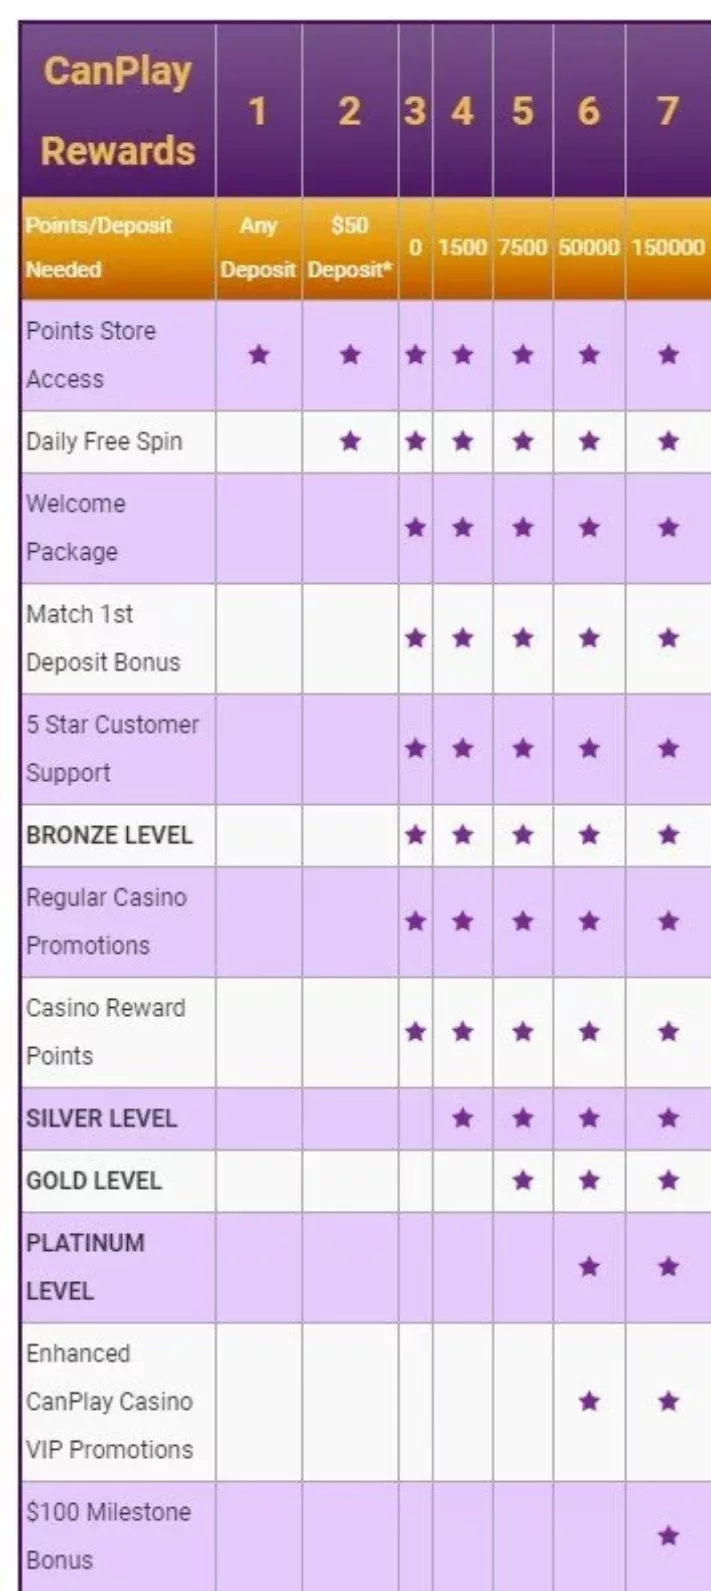 CanPlay Casino rewards page